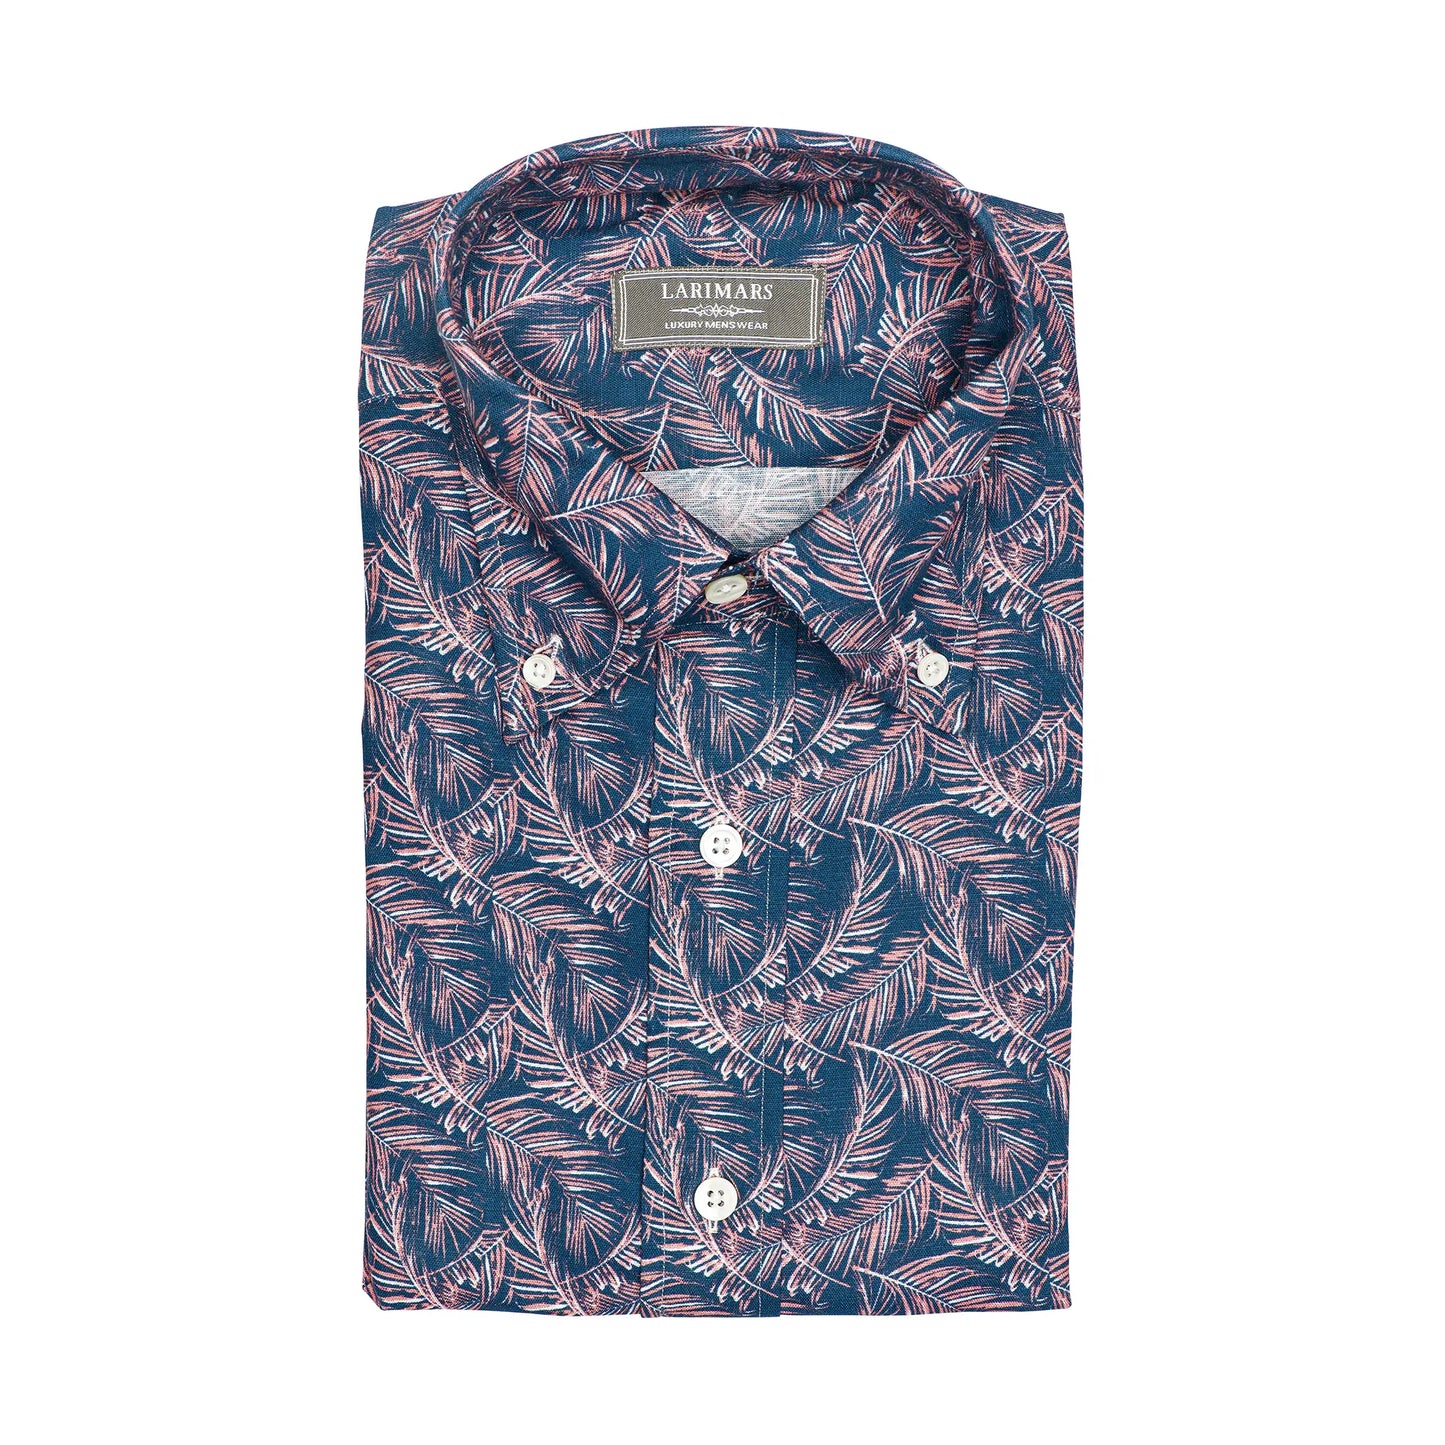 Cotton Linen Leaf Print | Burgoyne - Larimars Clothing Men's Formal and casual wear shirts